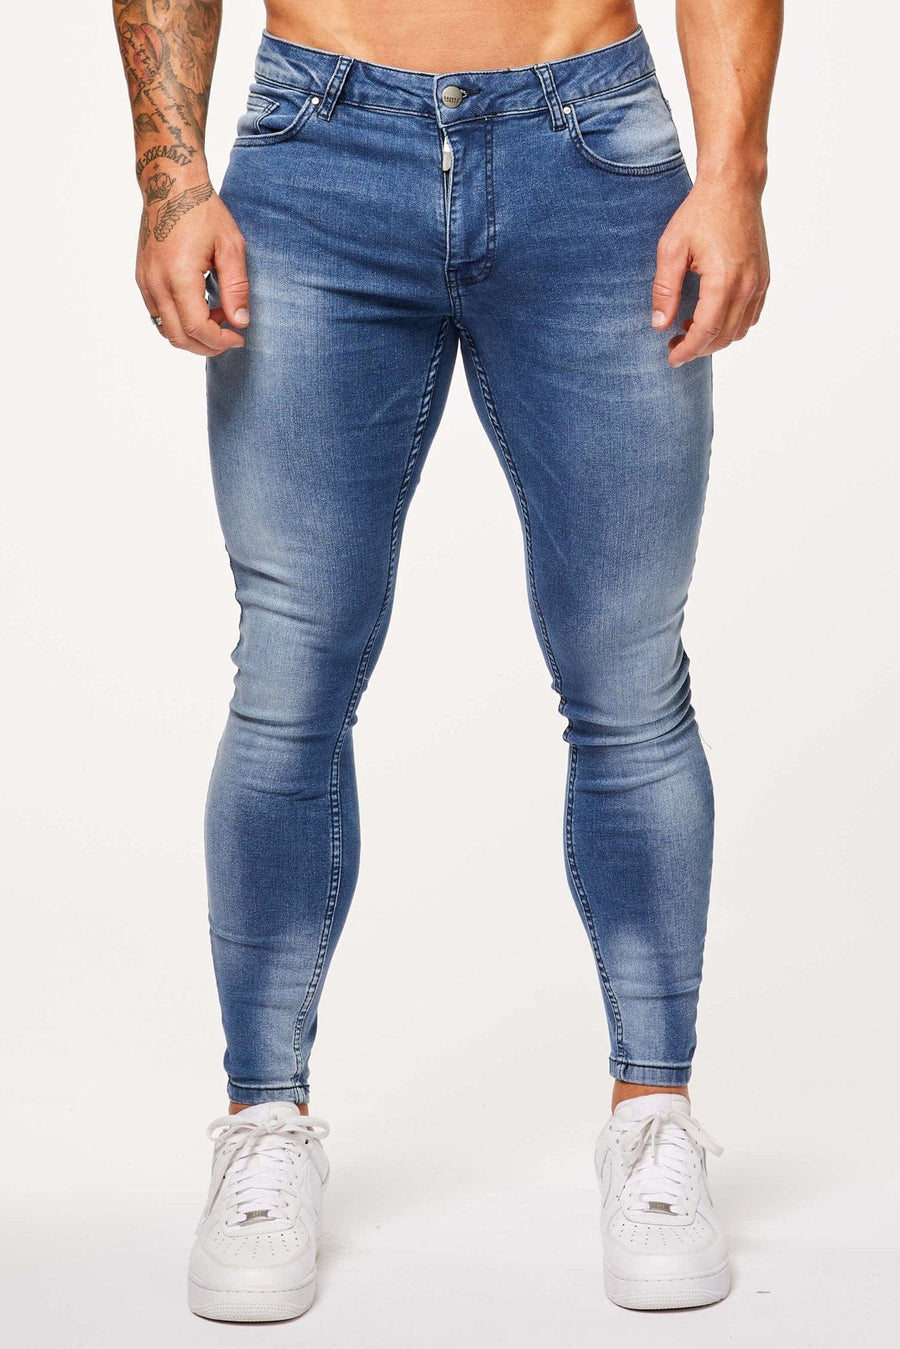 Legend London Jeans BLUE HIGHLIGHT WASH - SPRAY ON JEANS